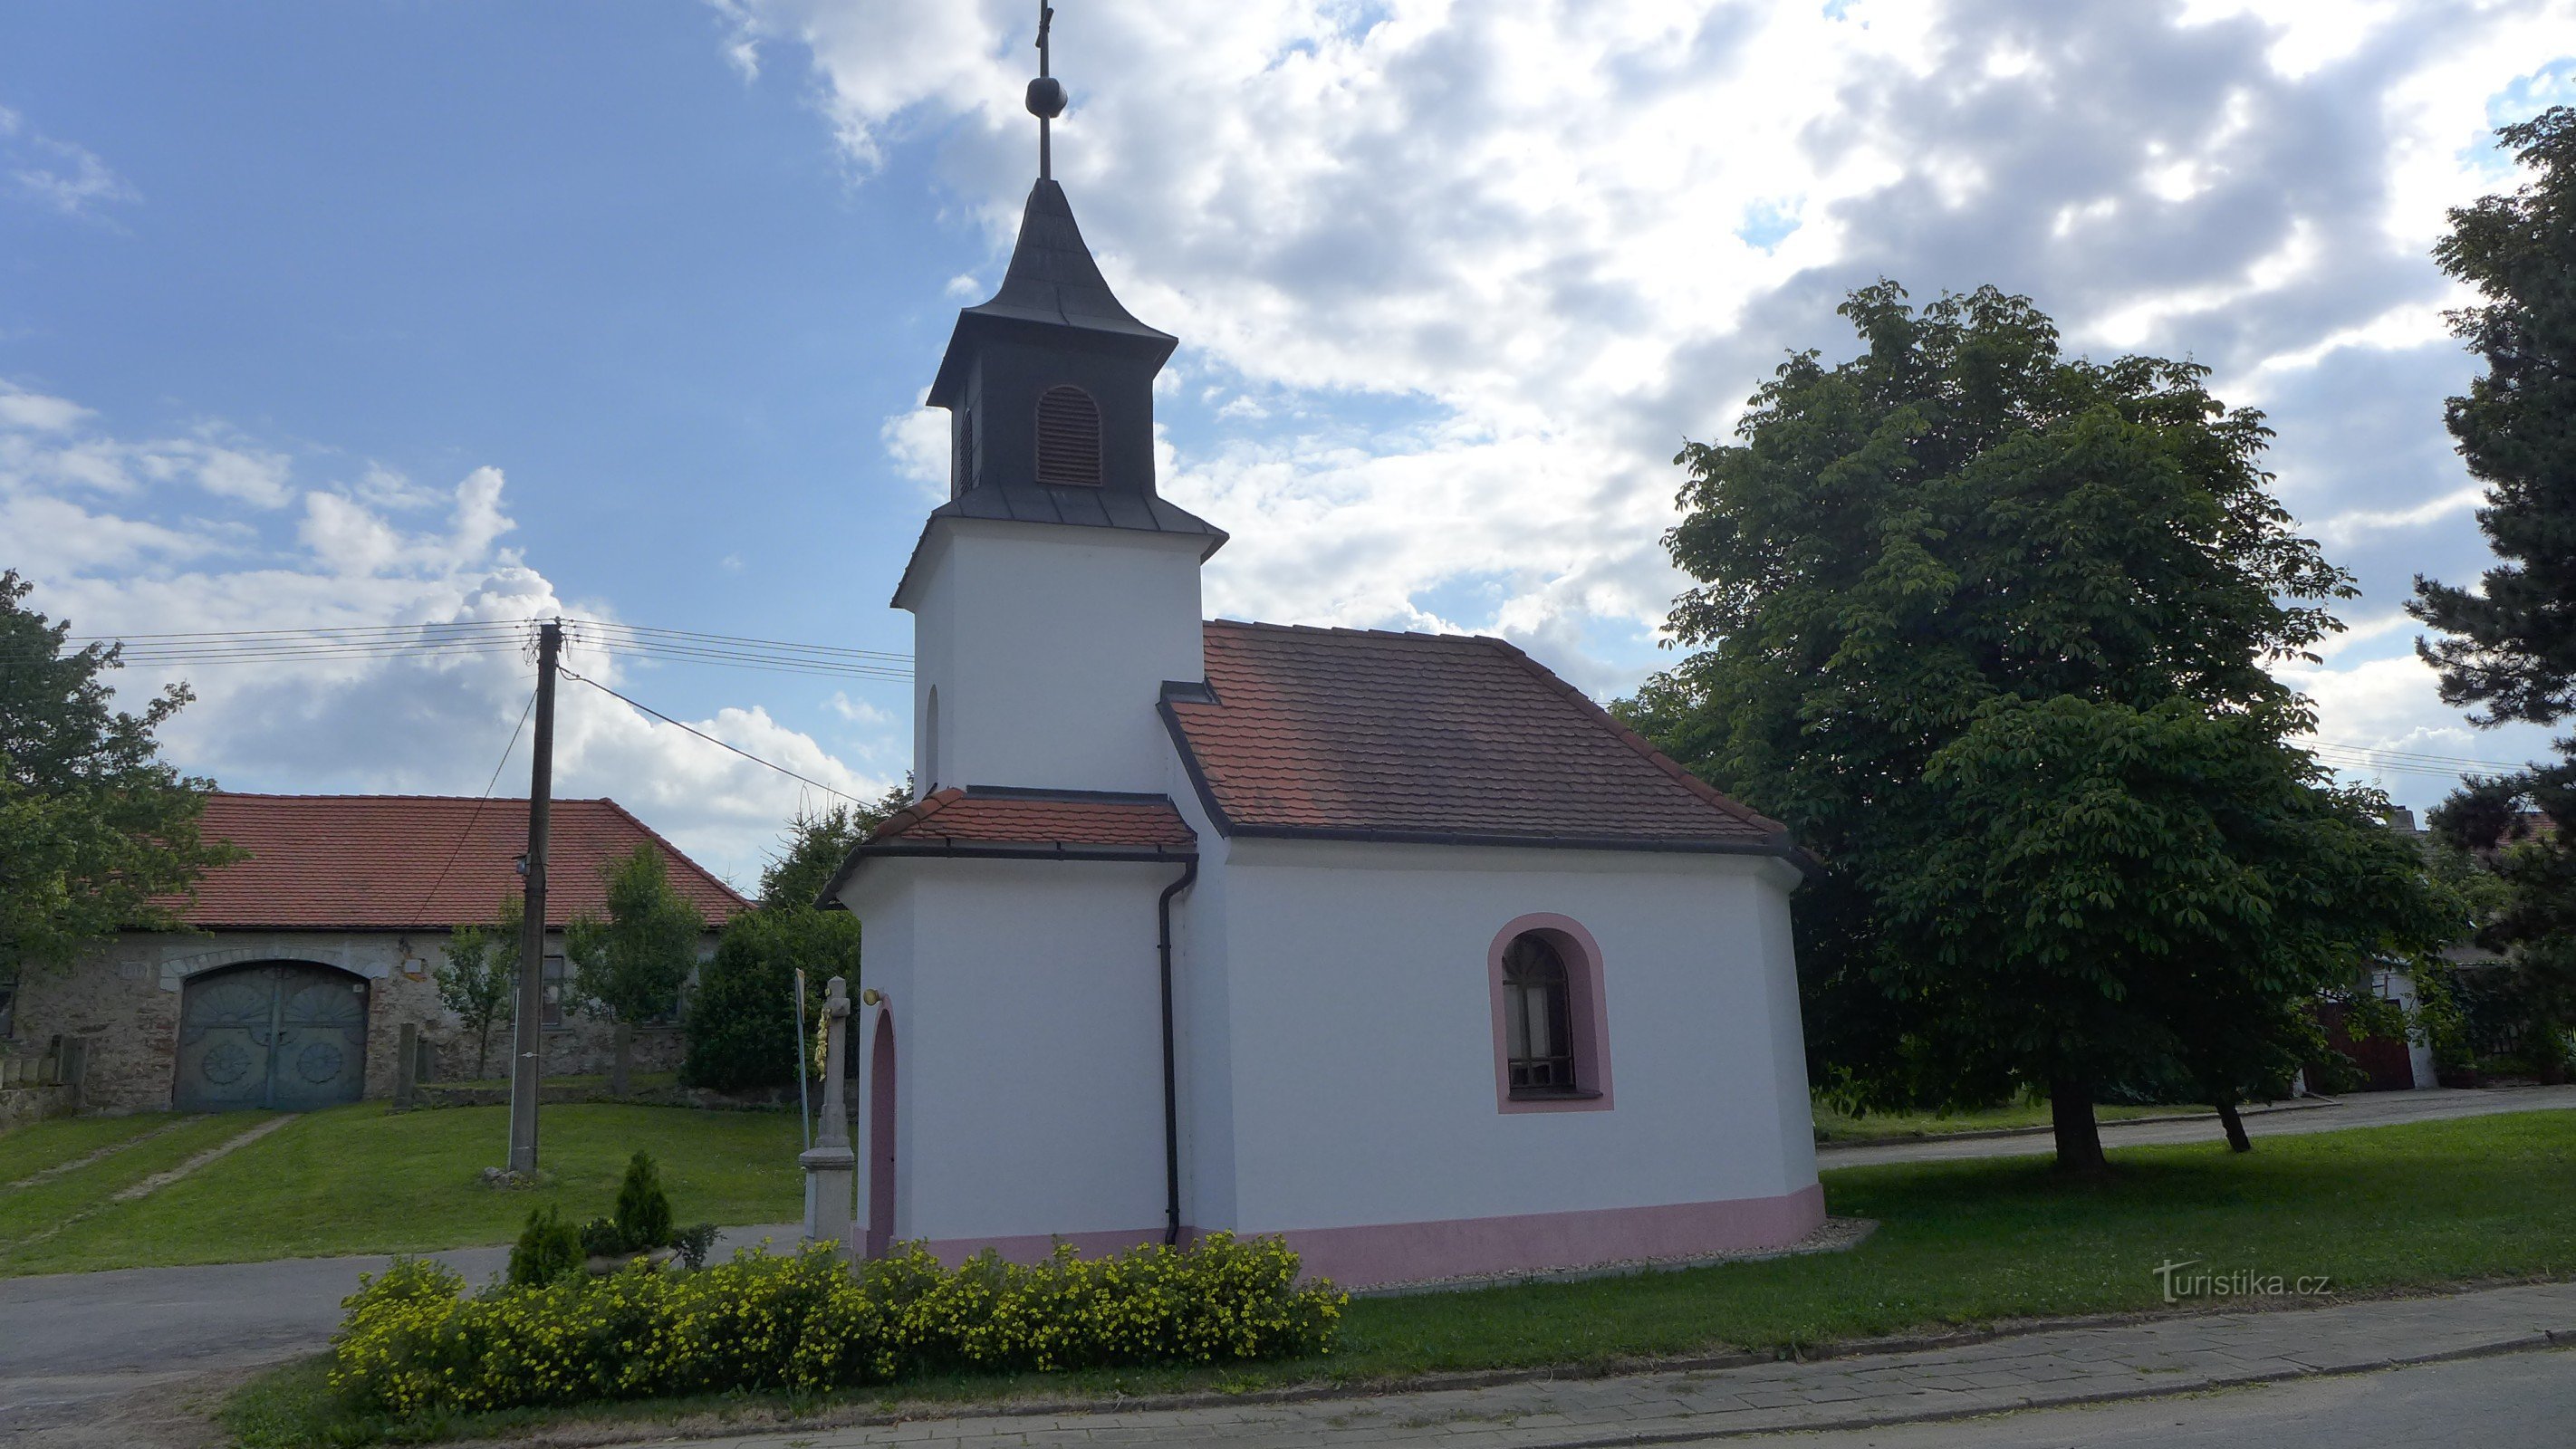 Dolní Vilémovice - capela Sf. Floriana